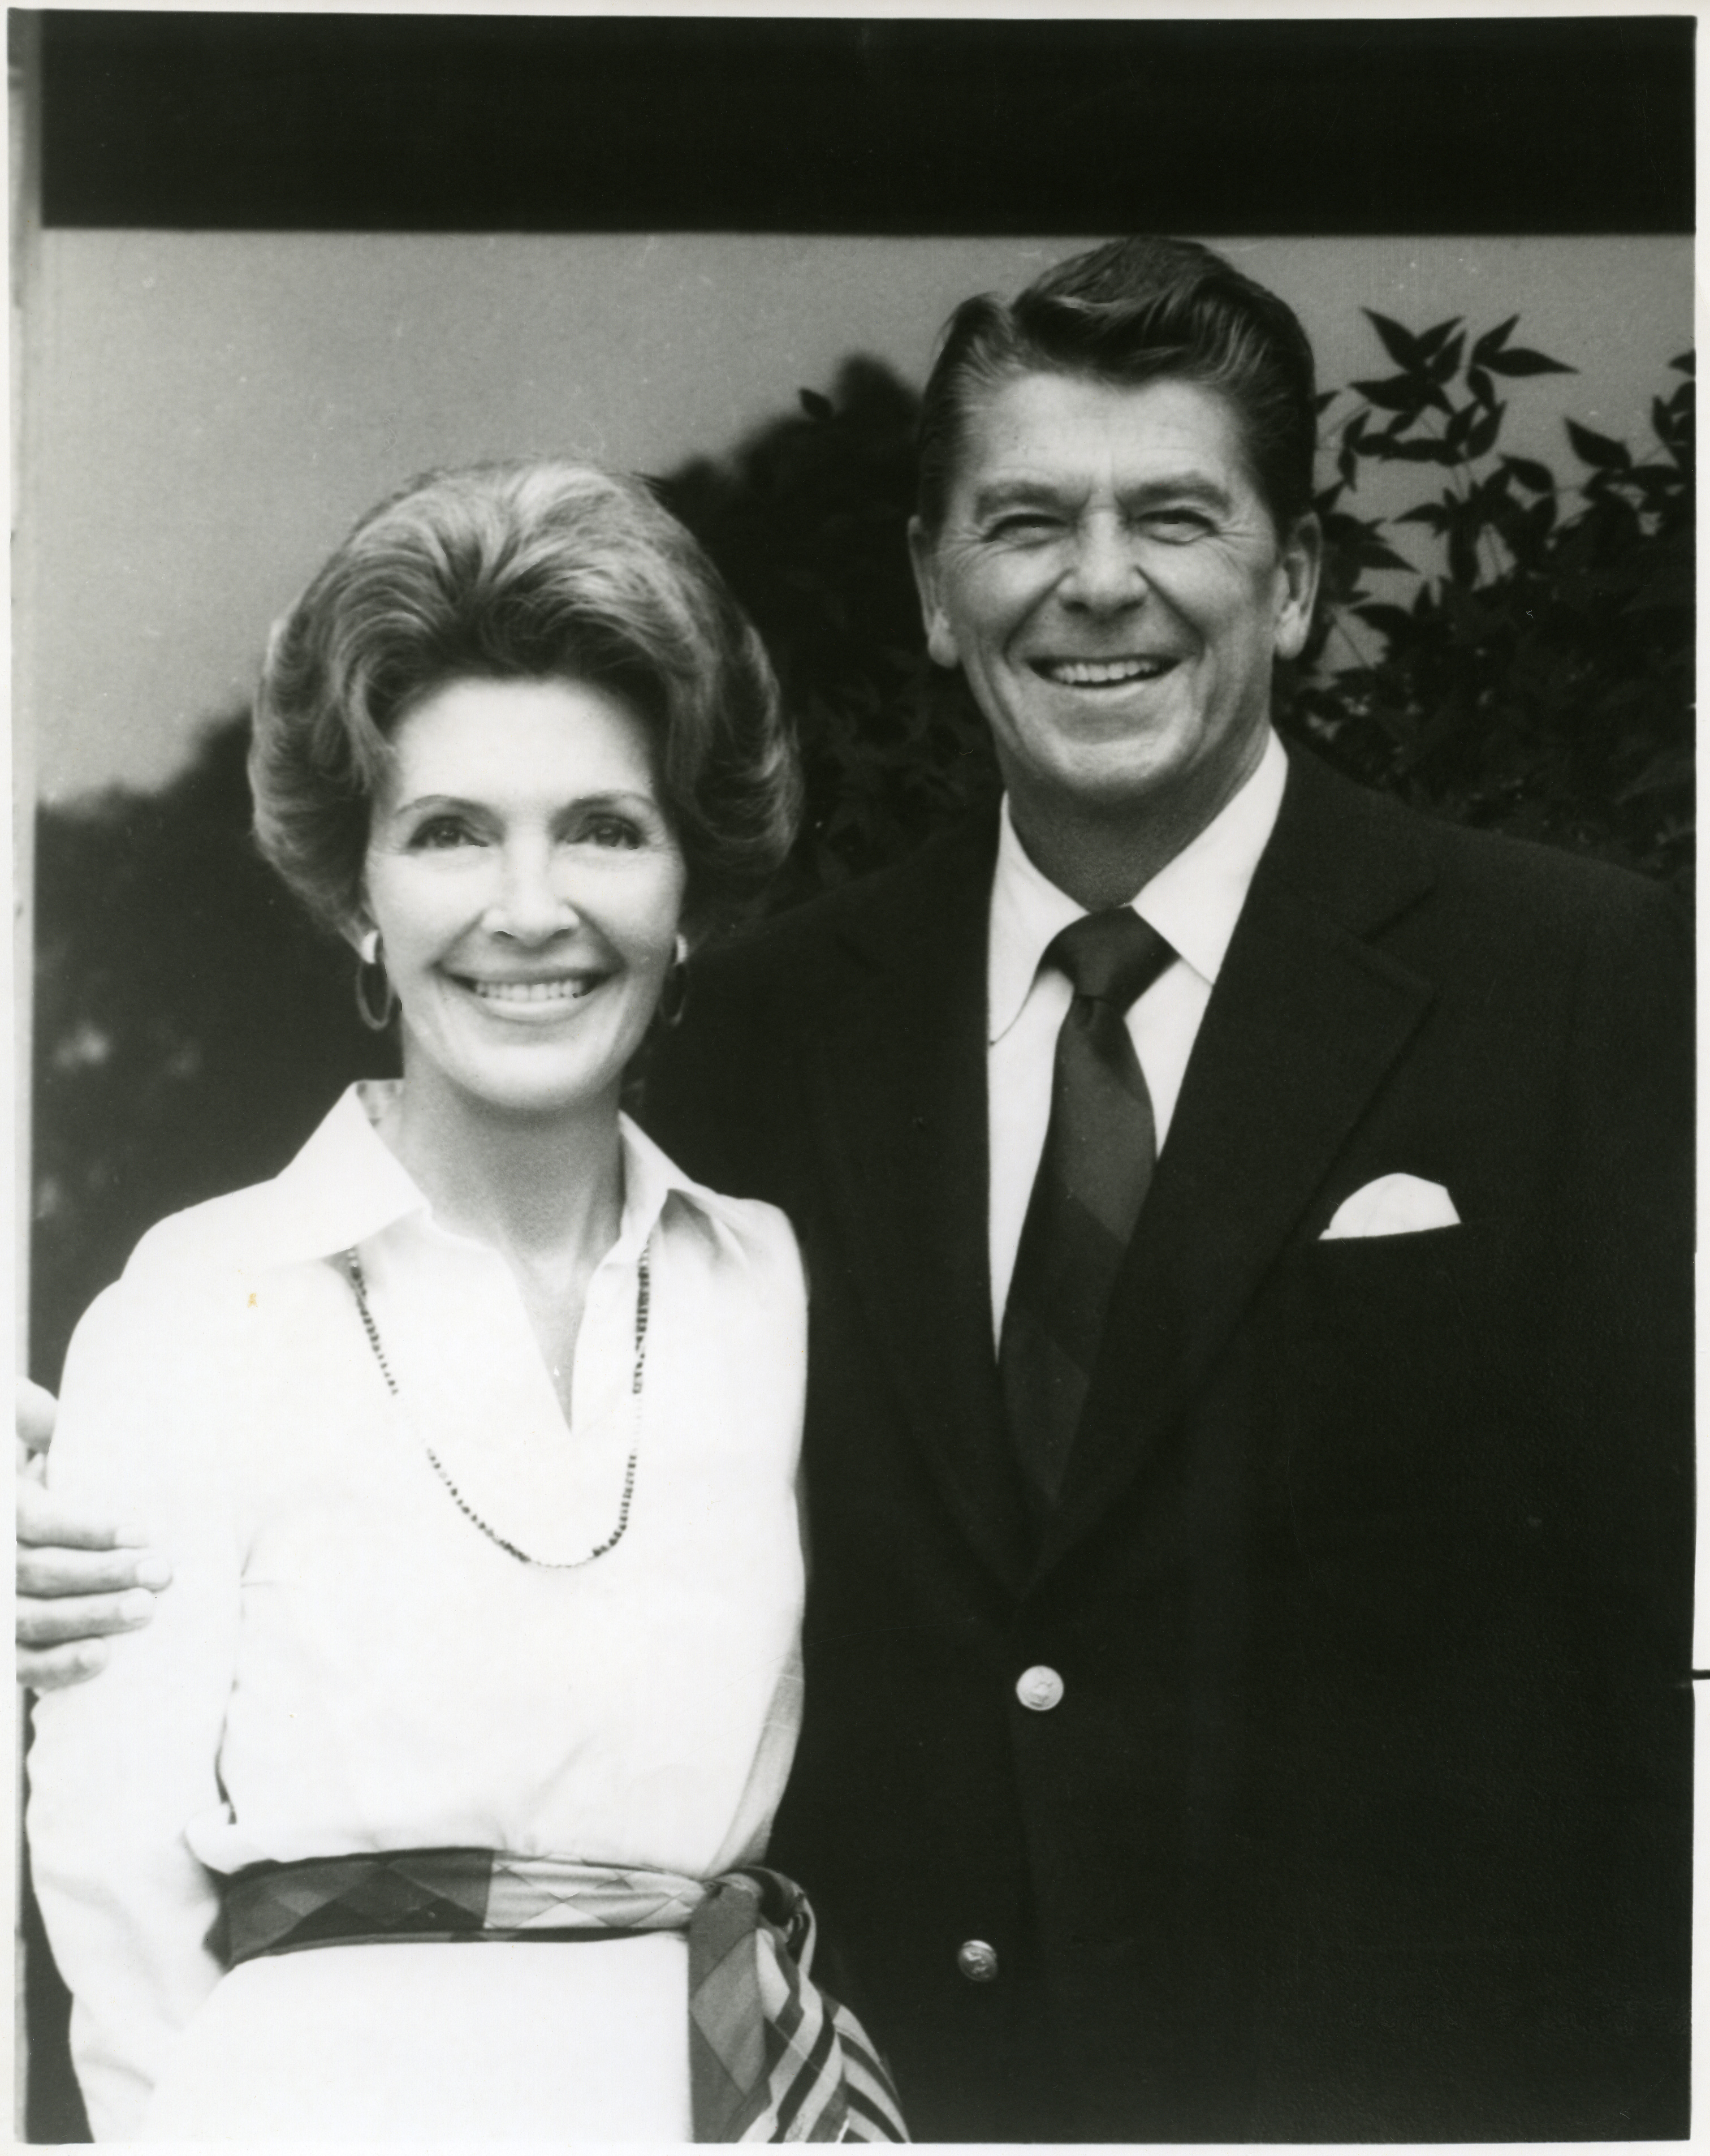 Ronald Reagan and Nancy Reagan Portrait